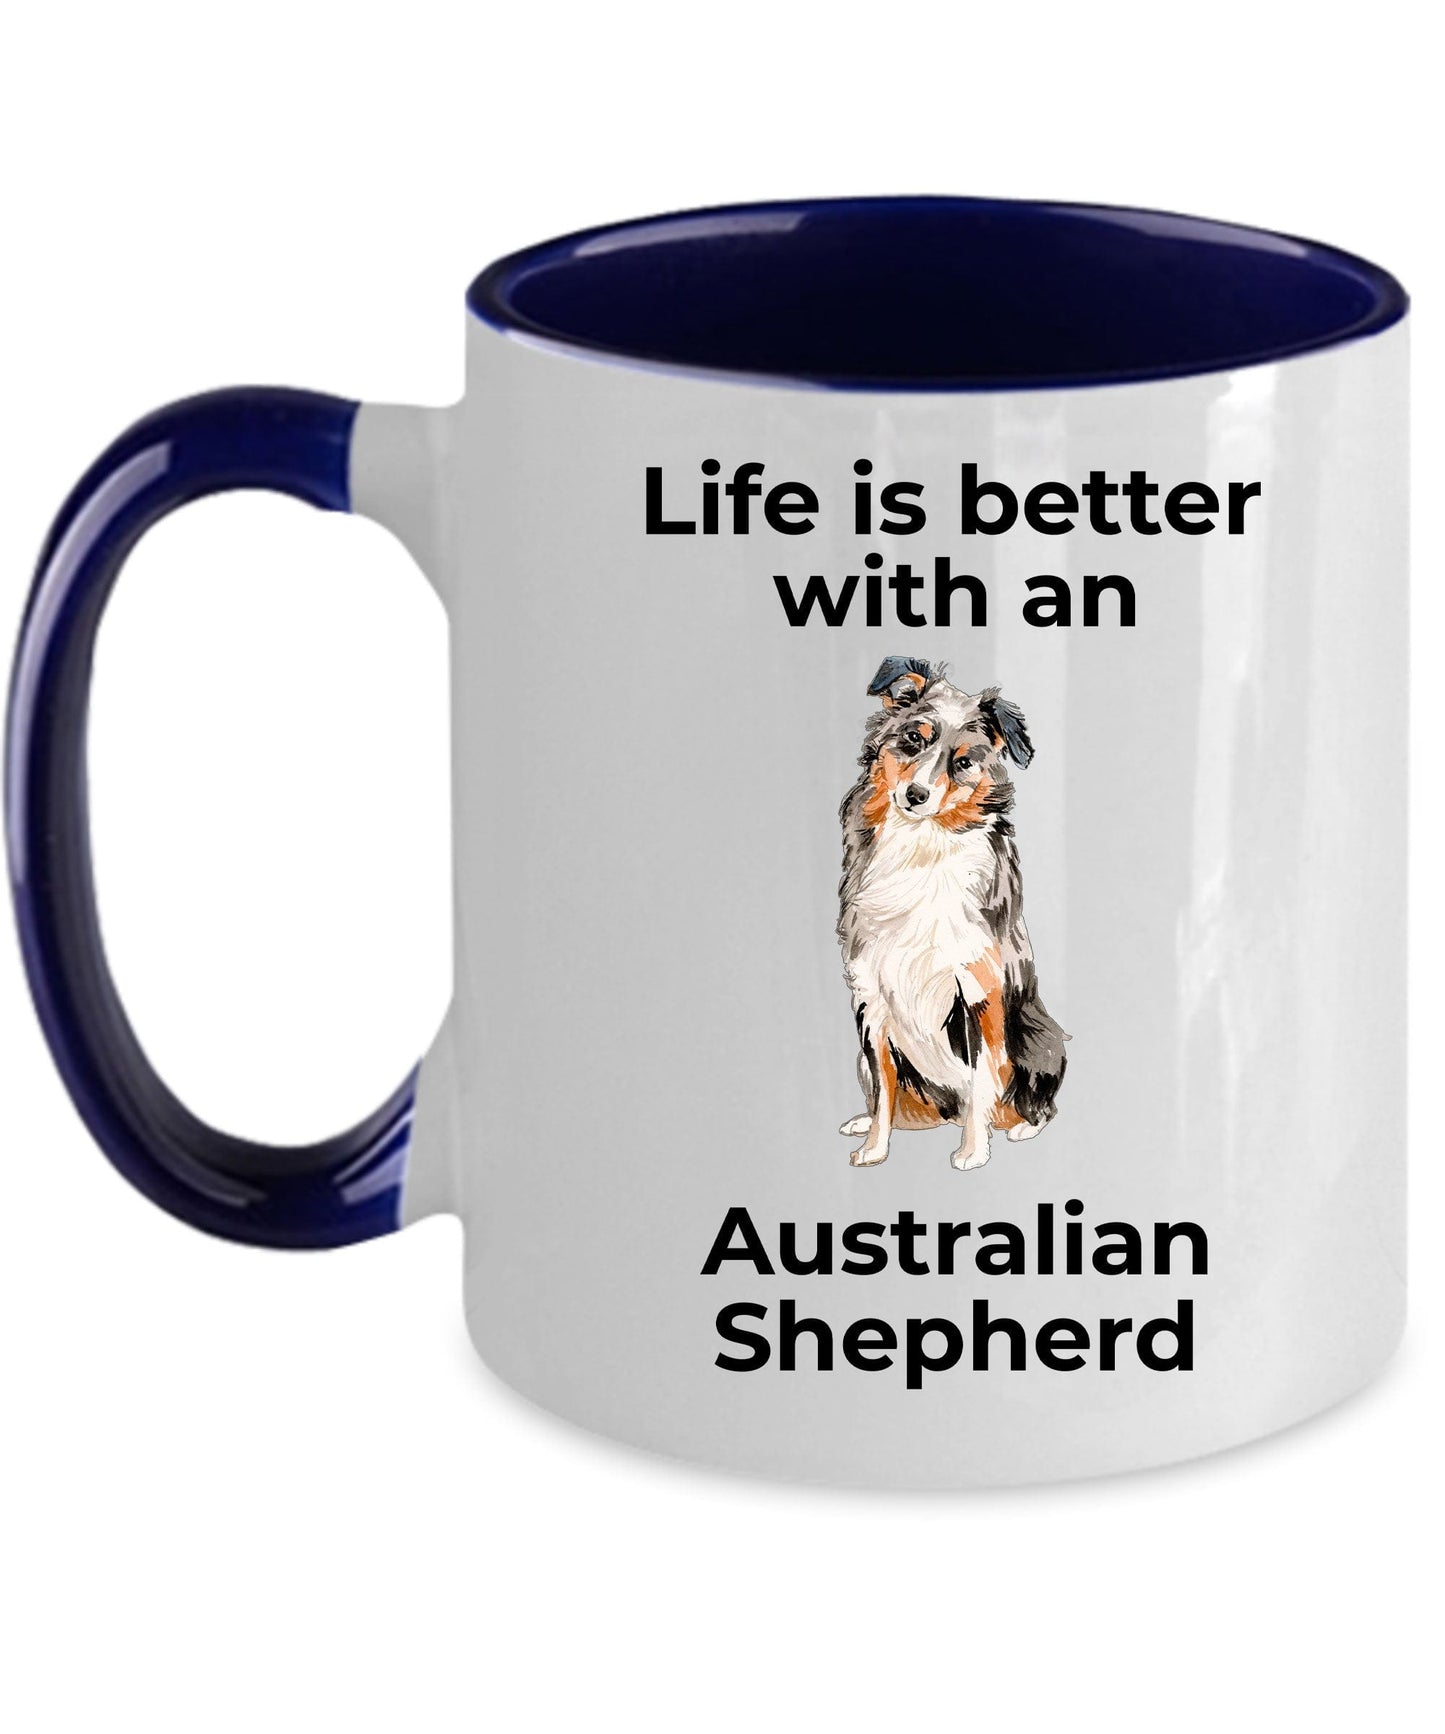 Australian Shepherd Dog two-tone color and white ceramic coffee mug - Life is Better with an Australian Shepherd